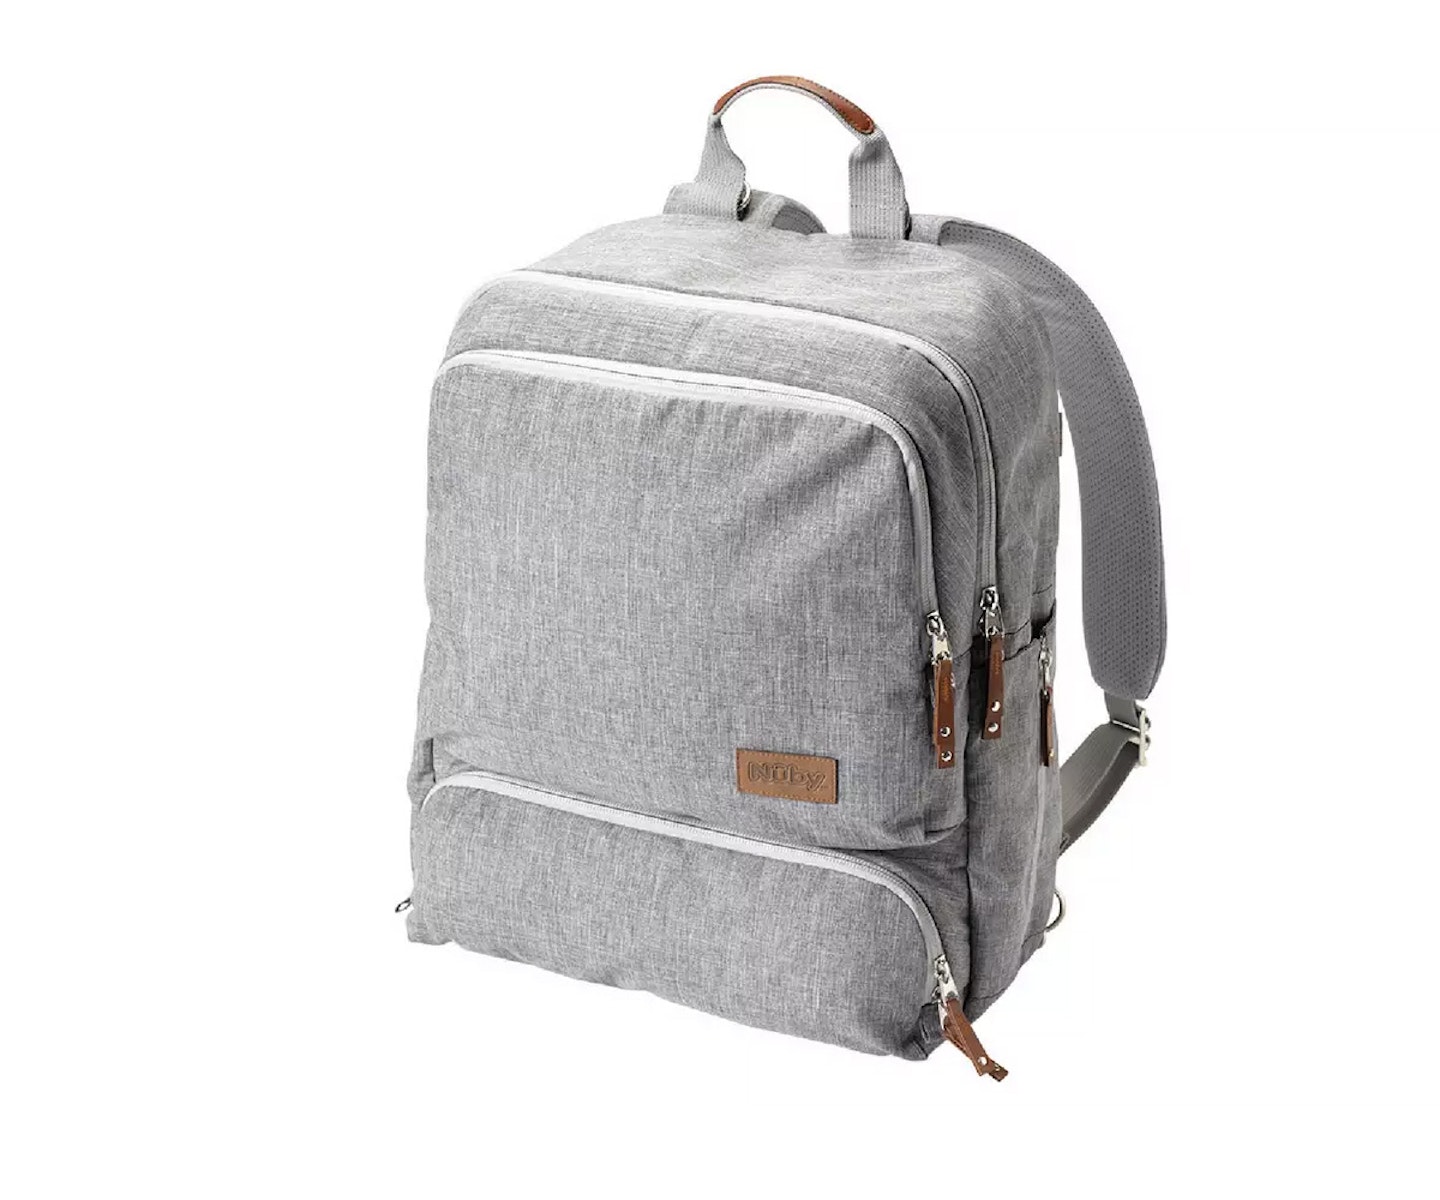 Nuby Backpack